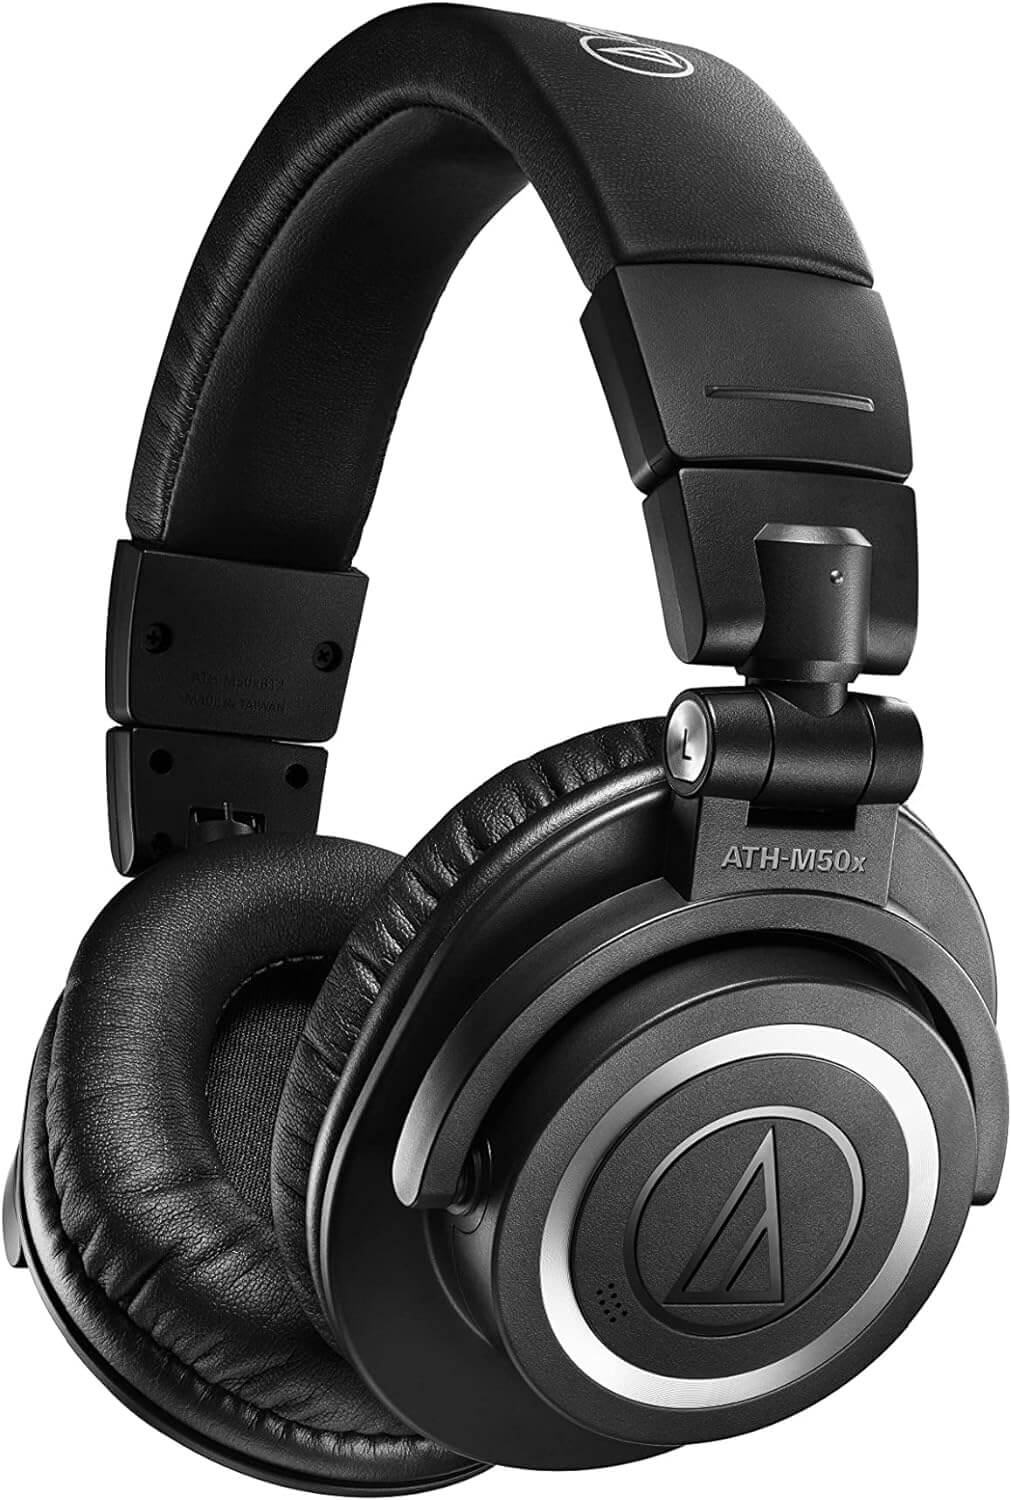 ATH-M50xBT2 Headphones